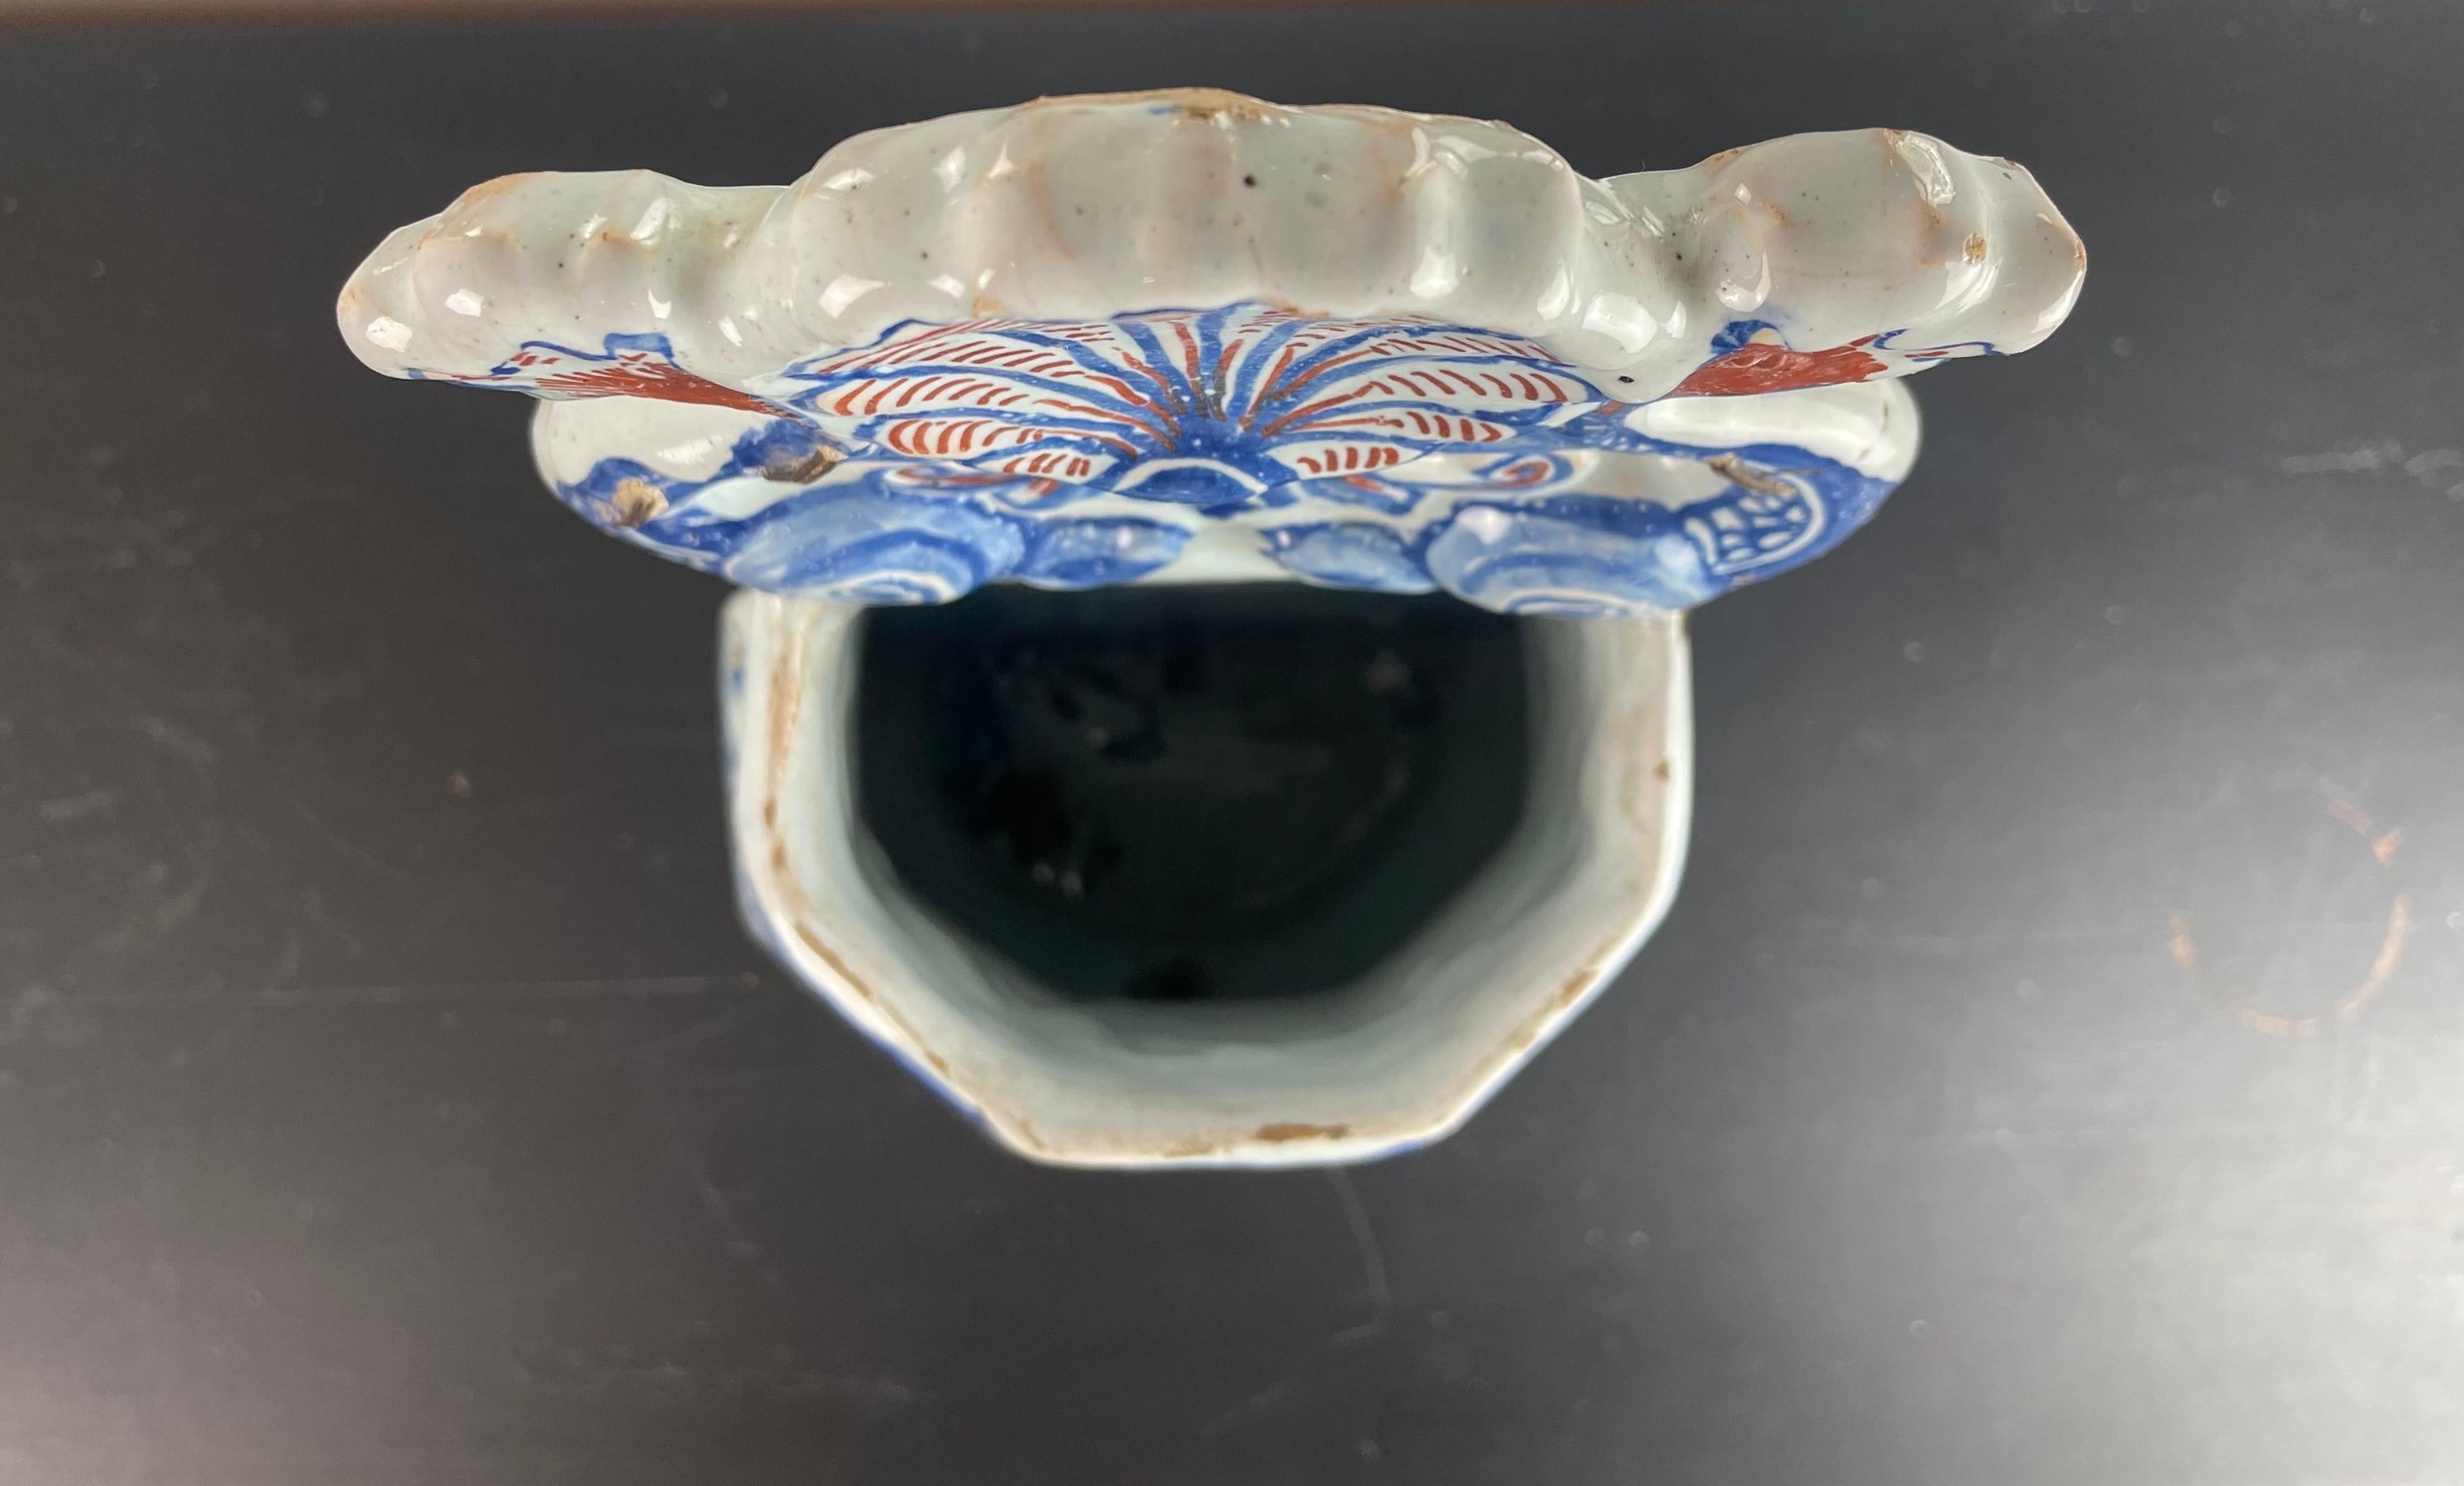 Vase - Rouen earthenware fountain, flower pot - blue white - 18th century France For Sale 5